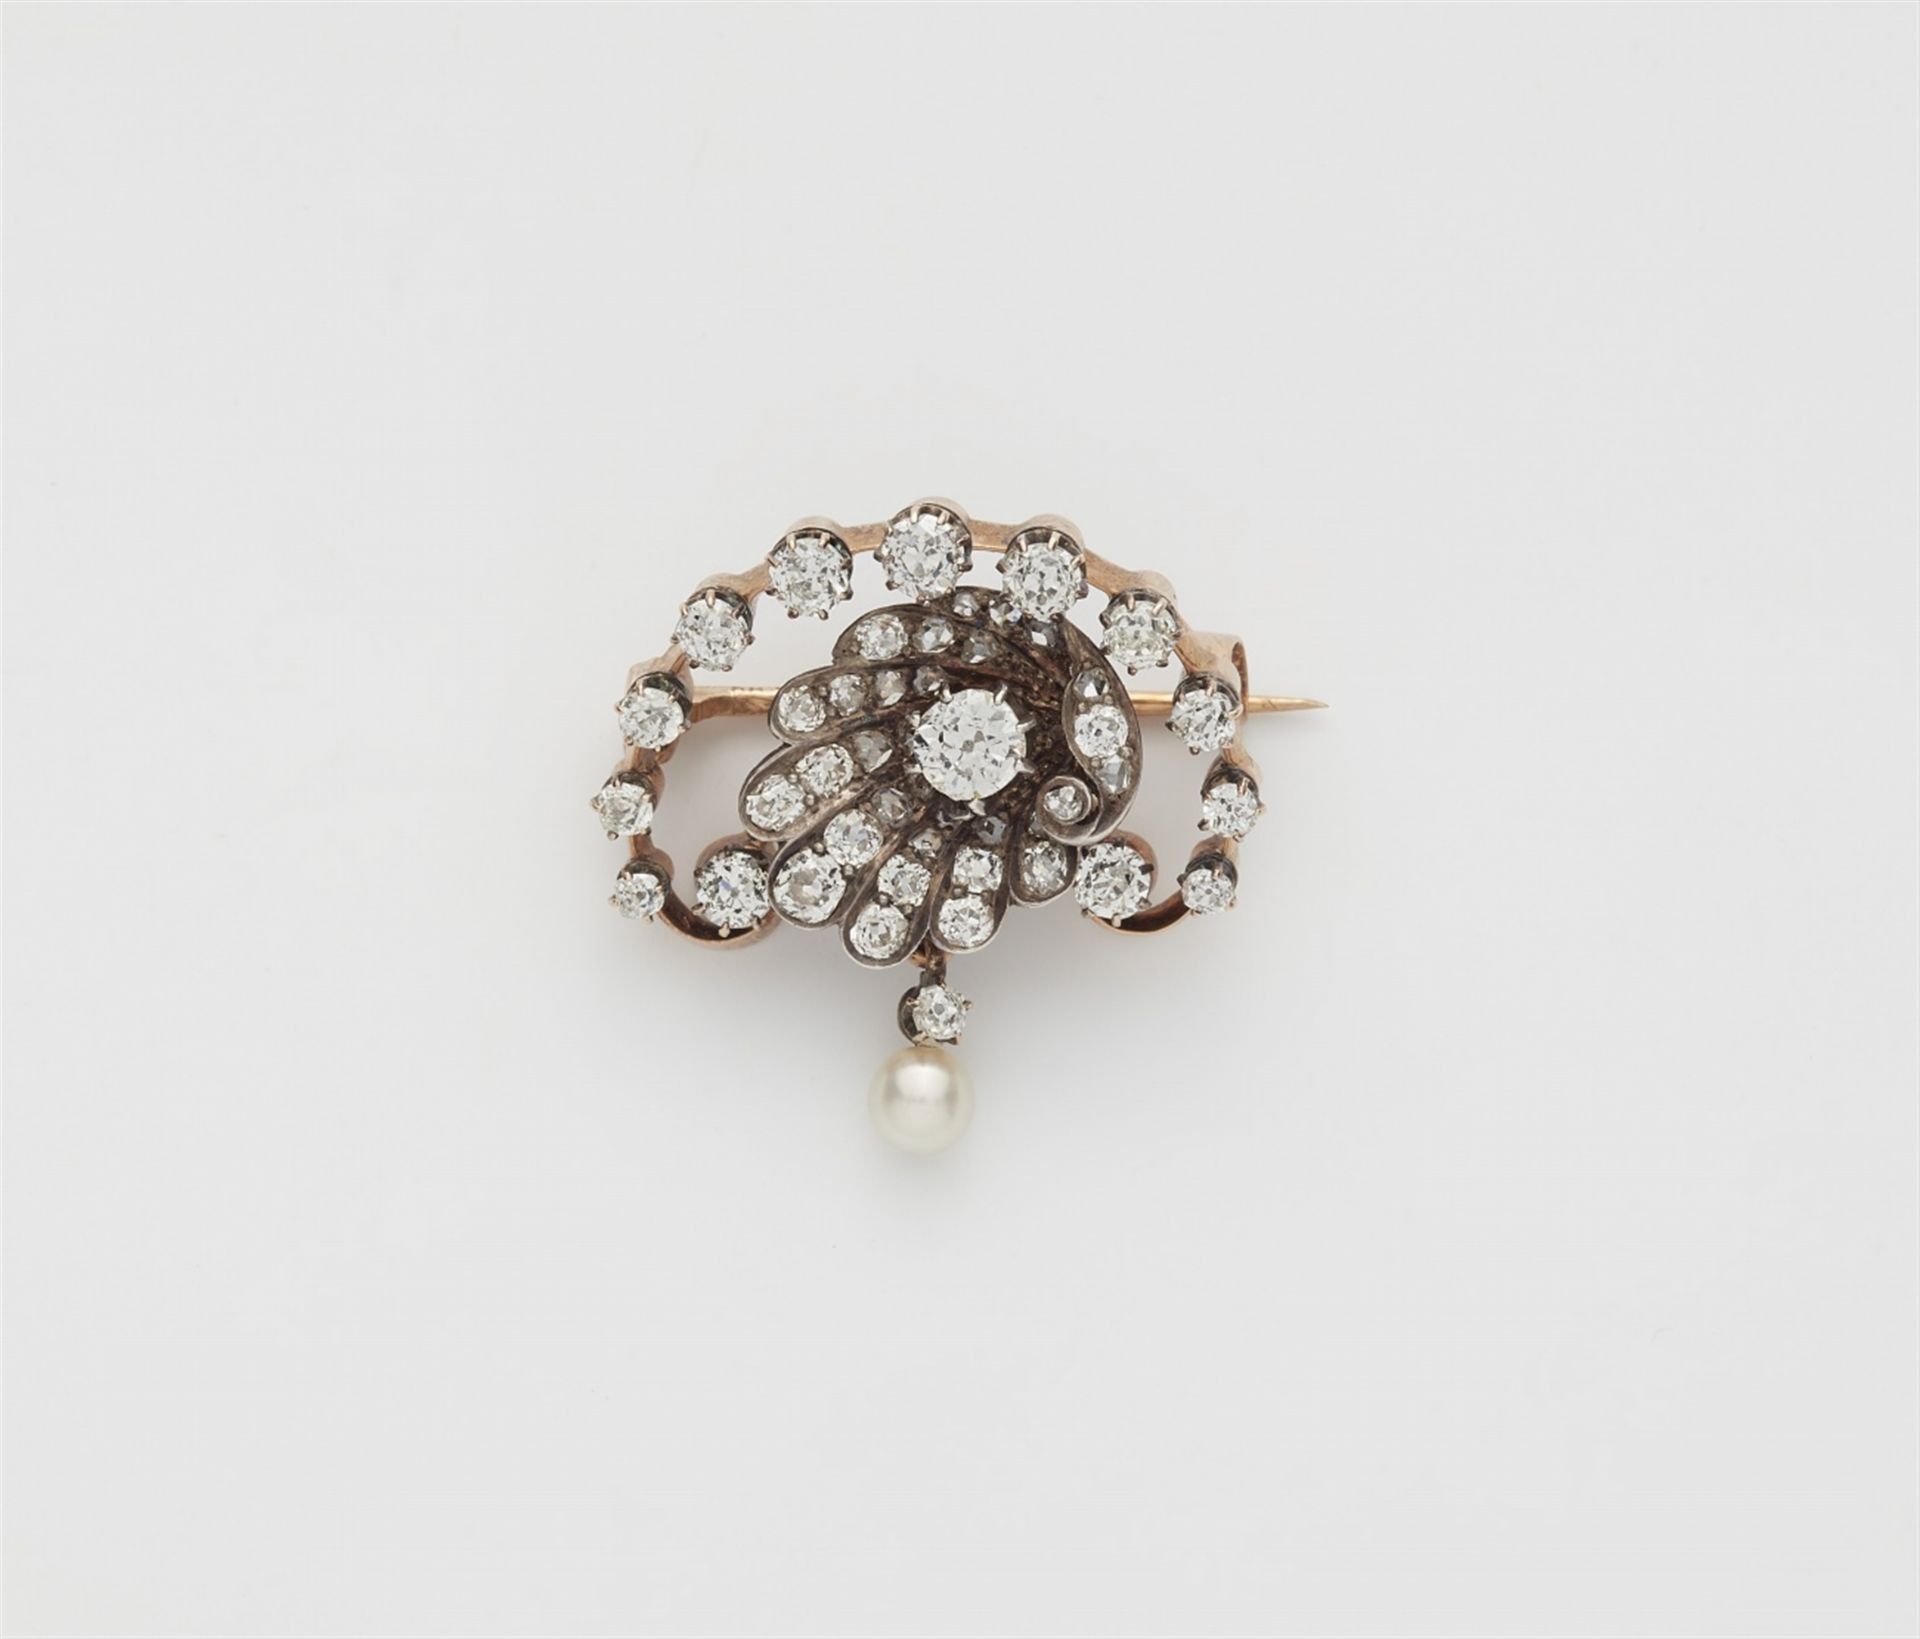 A Belle Epoque 18k gold diamond brooch